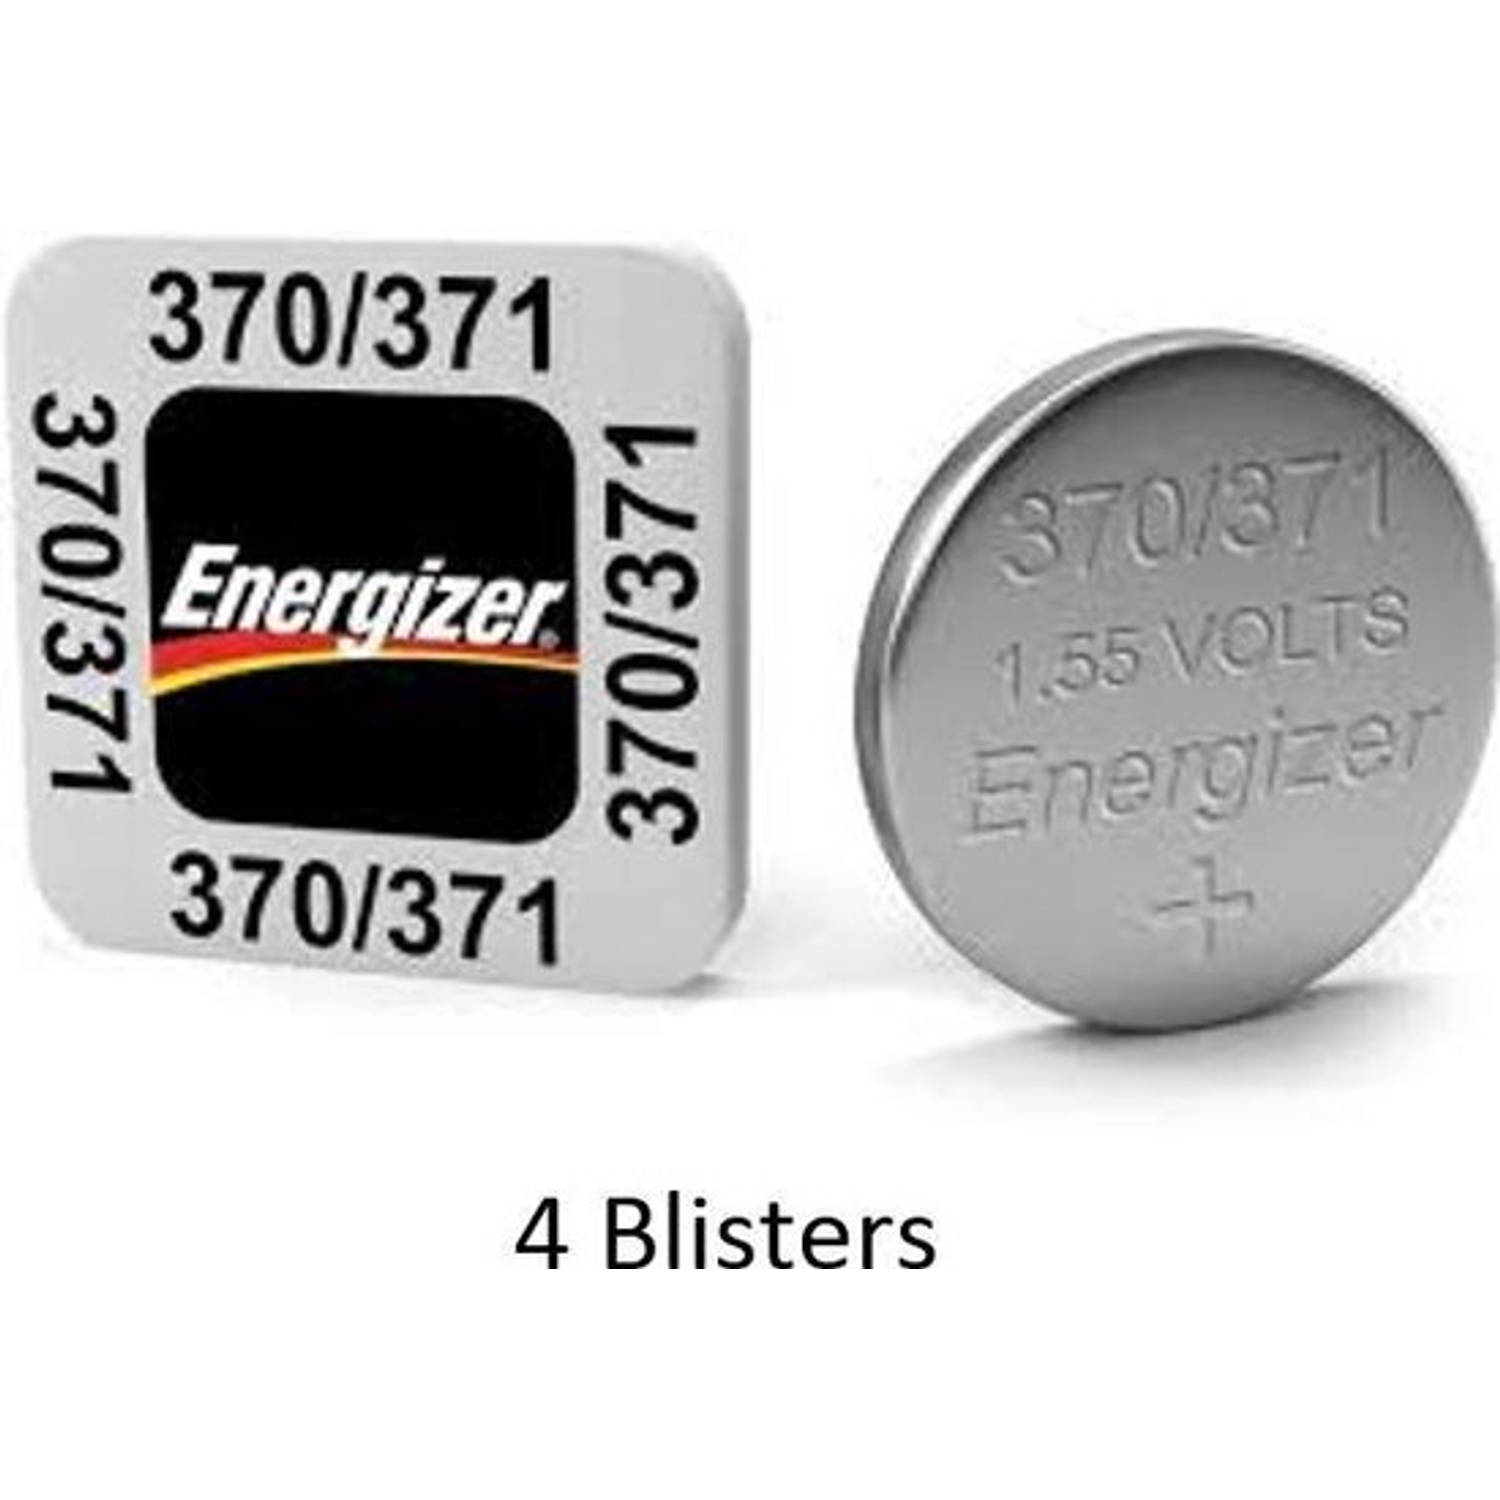 4 stuks (4 blisters a 1 stuk) Energizer 370/371 SR69 1.55V knoopcel batterij